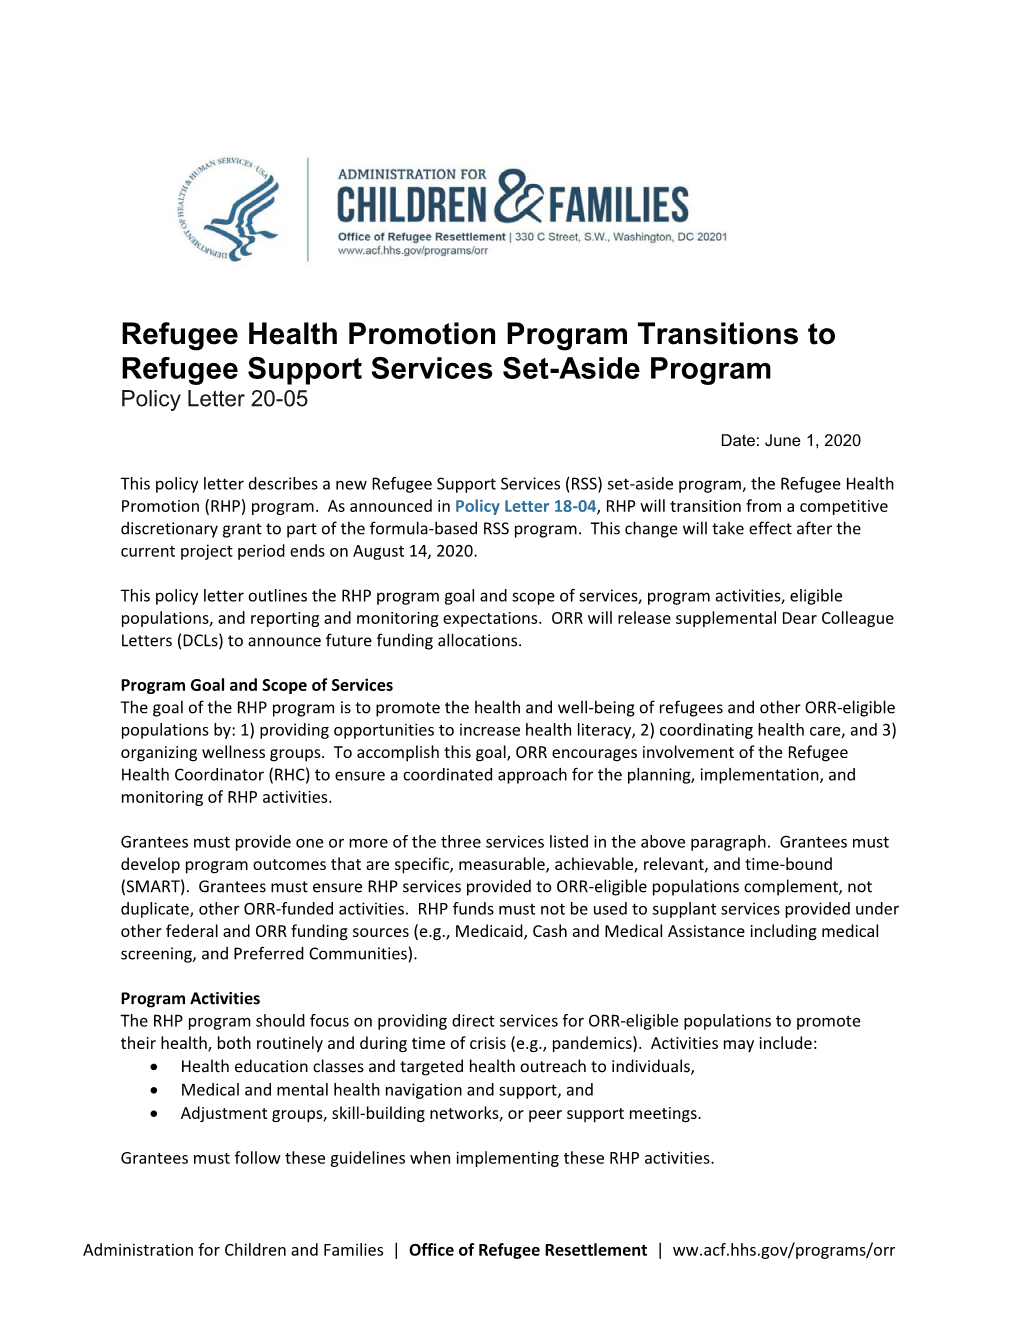 Refugee Health Promotion Program Transitions to Refugee Support Services Set-Aside Program Policy Letter 20-05